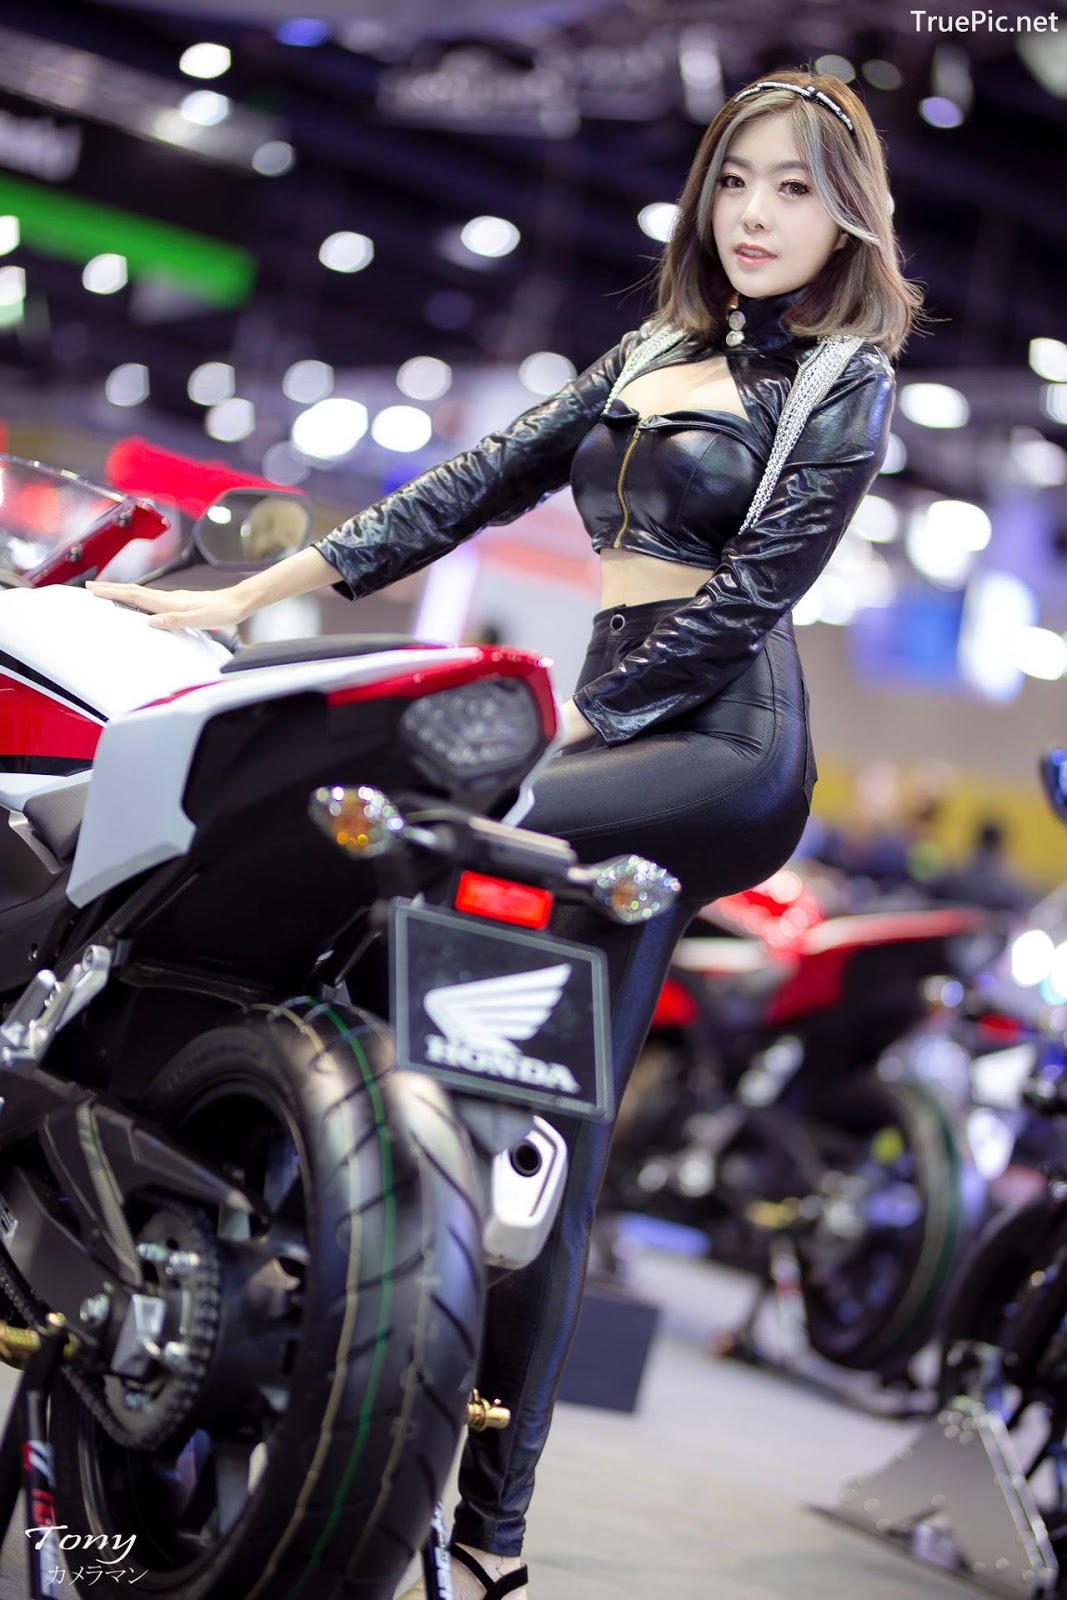 Image-Thailand-Hot-Model-Thai-Racing-Girl-At-Big-Motor-2018-TruePic.net- Picture-135